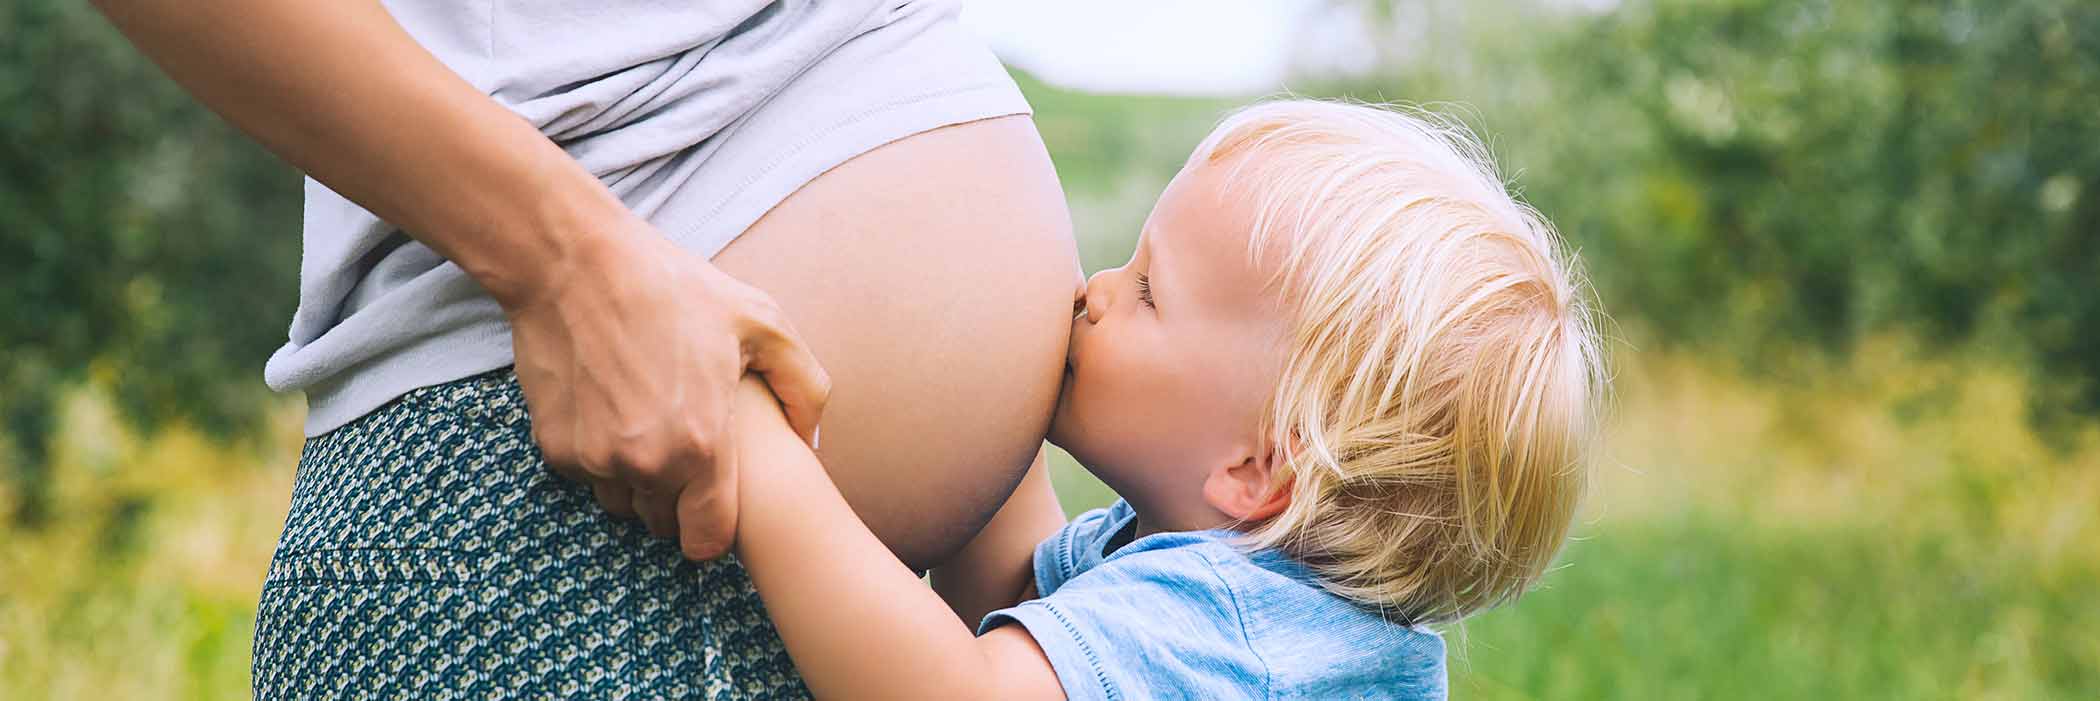 Fertilitetsklinikken Vitanova udfører fertilitetsbehandling med Cryos donorsæd